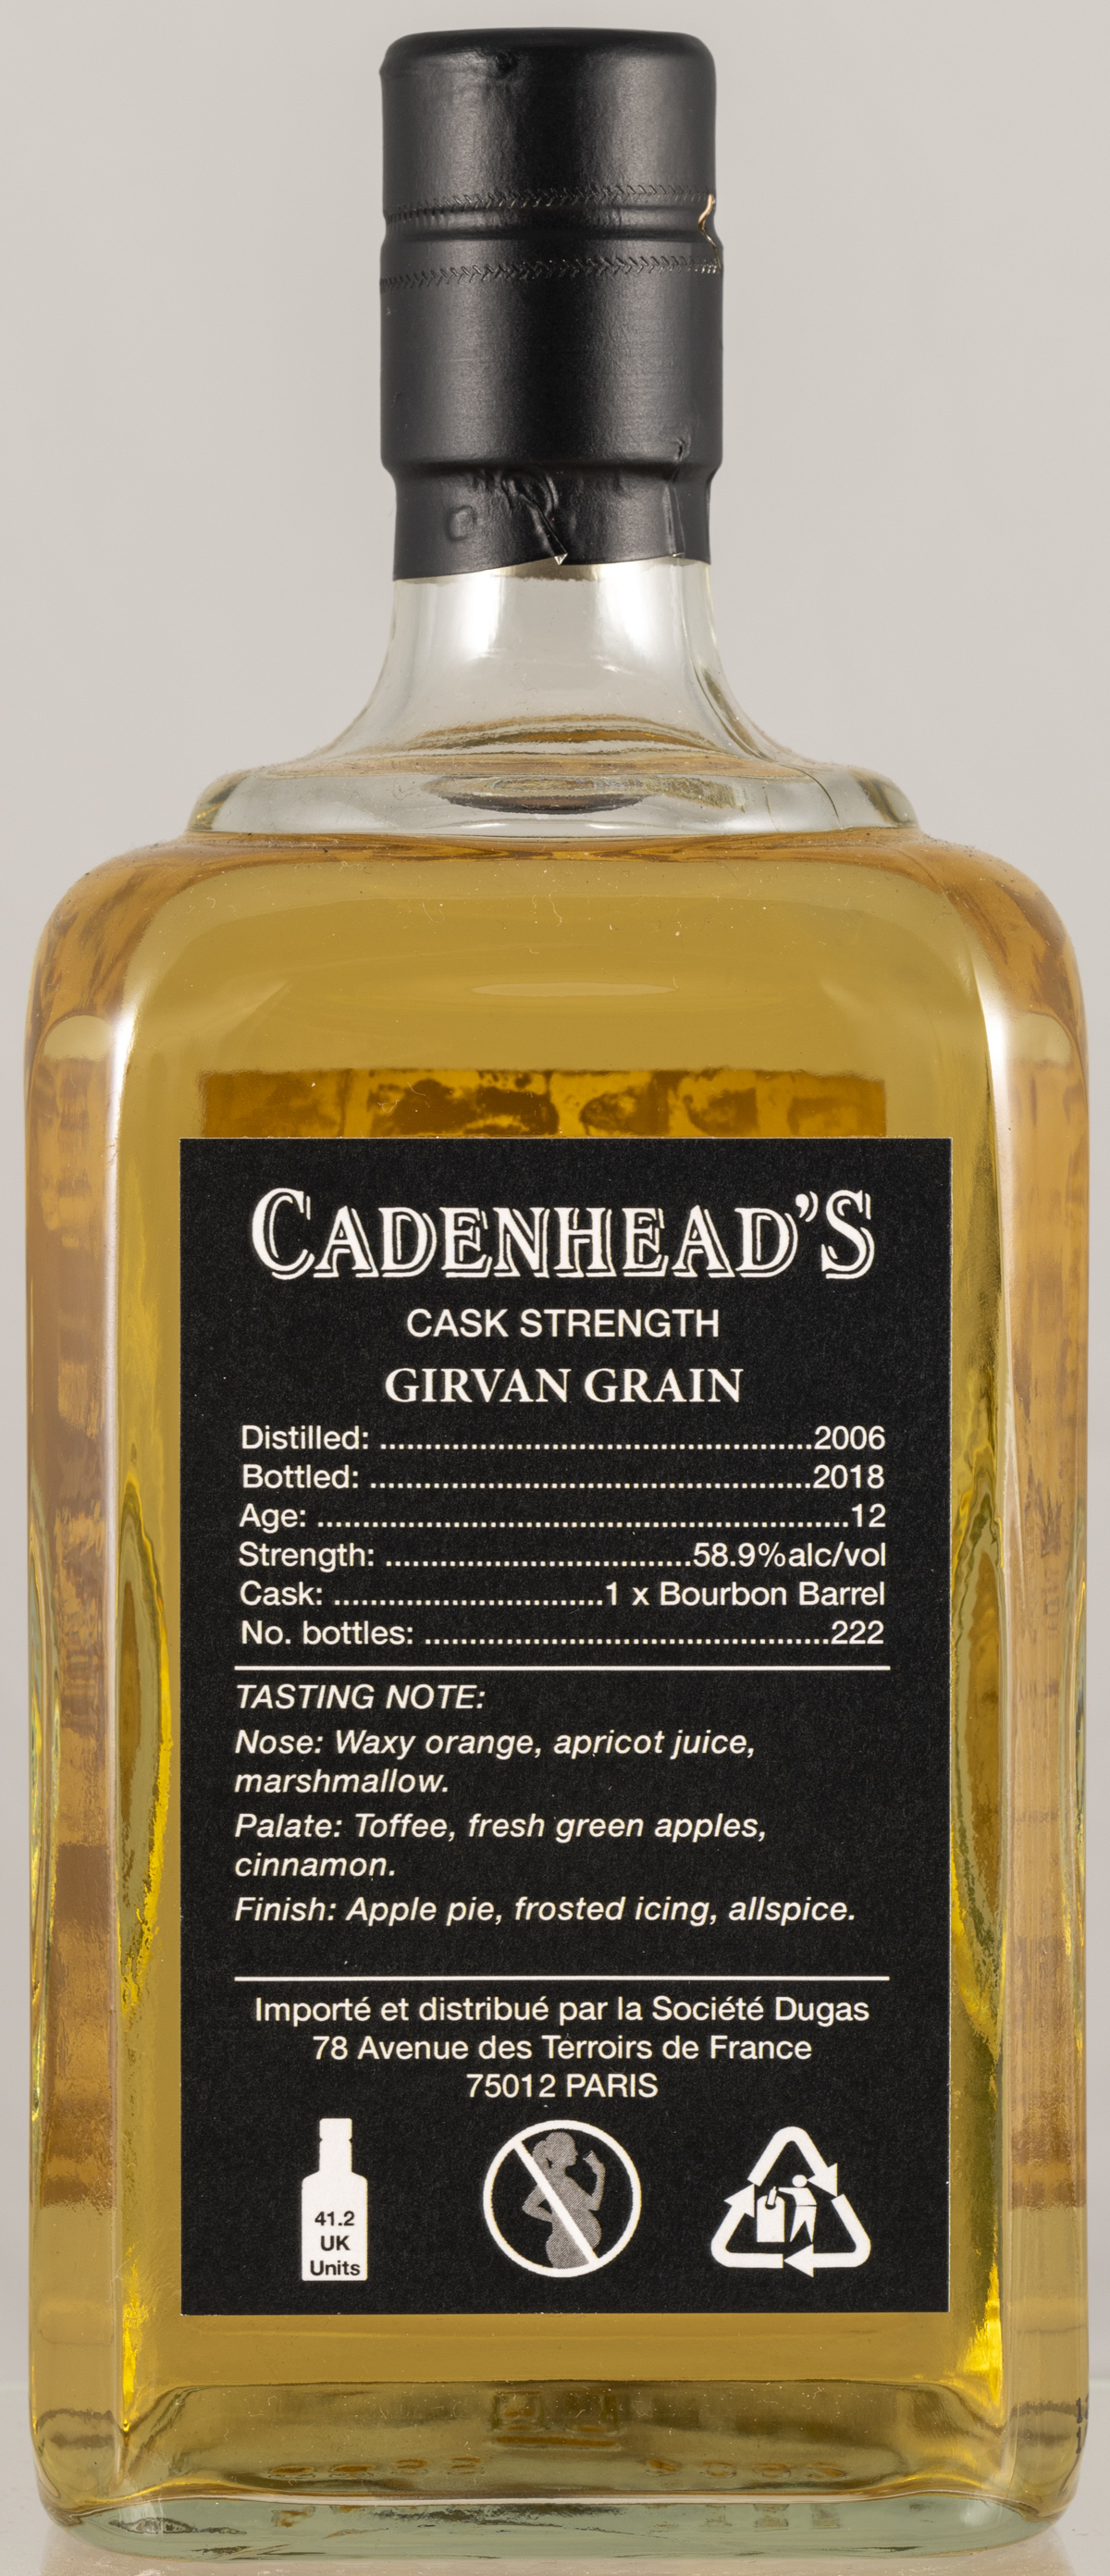 Billede: PHC_6984 - Cadenhead Girvan 12 - bottle back.jpg